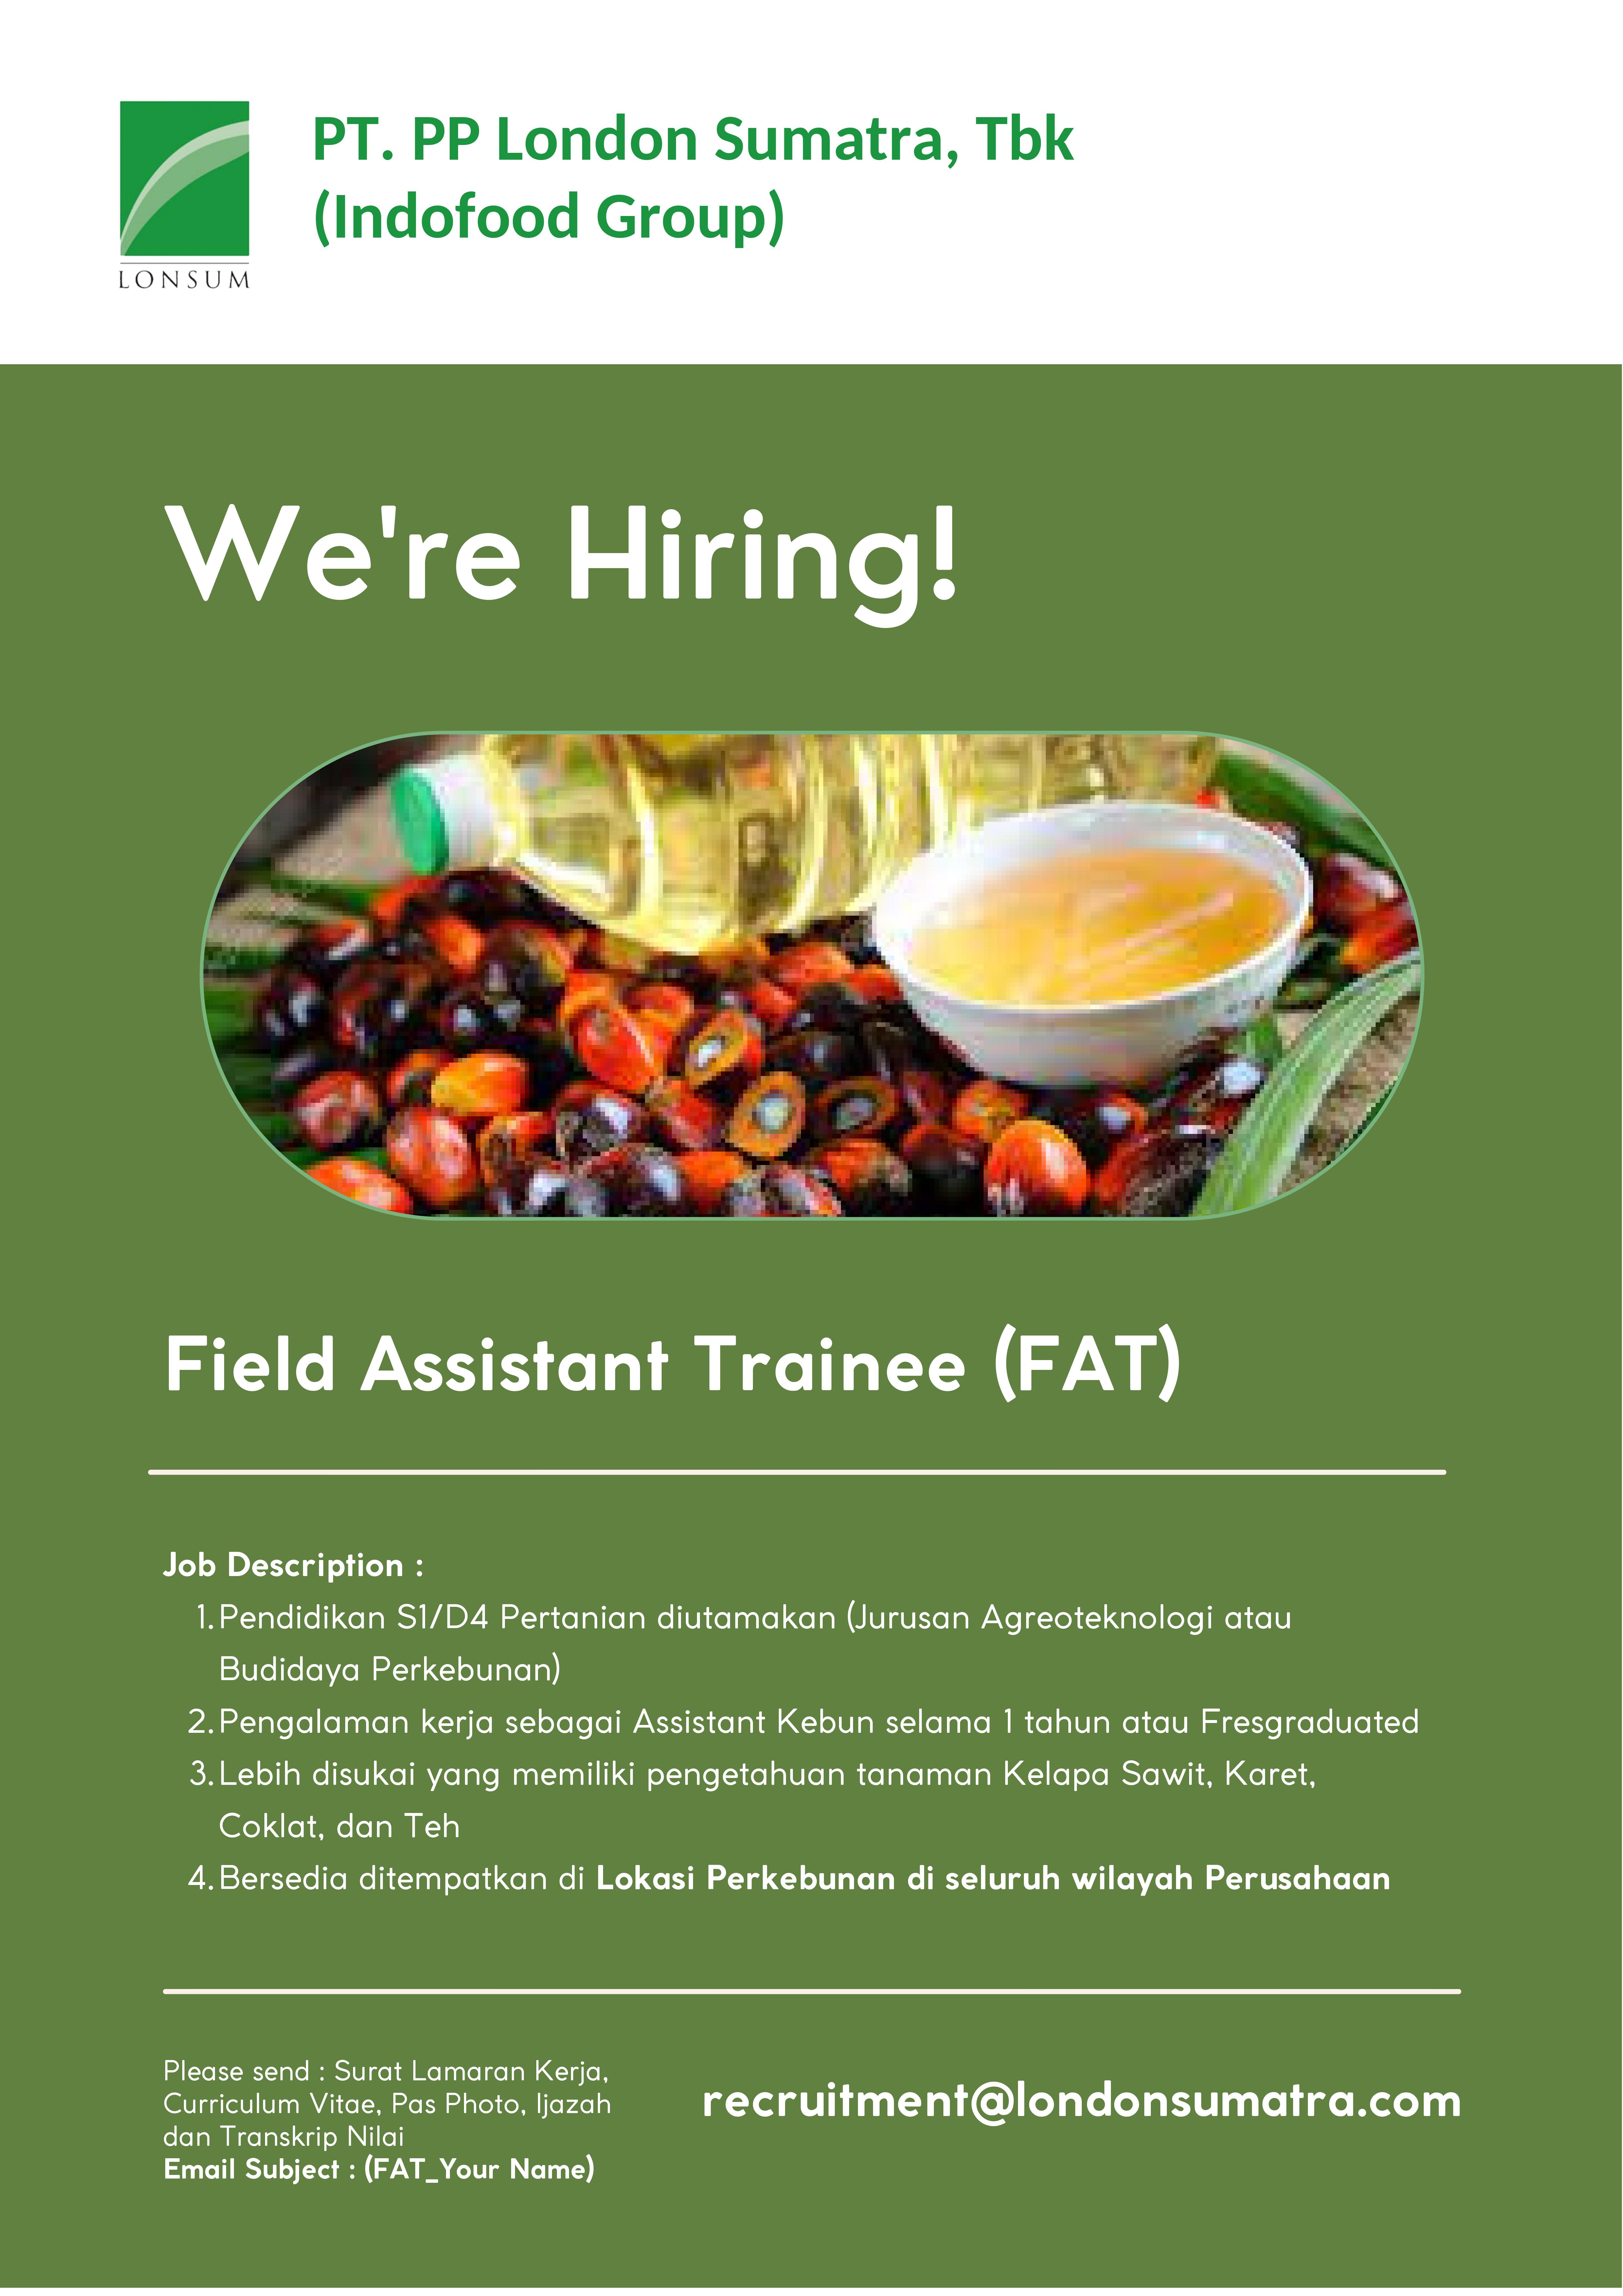 Field assistant trainee (FAT)